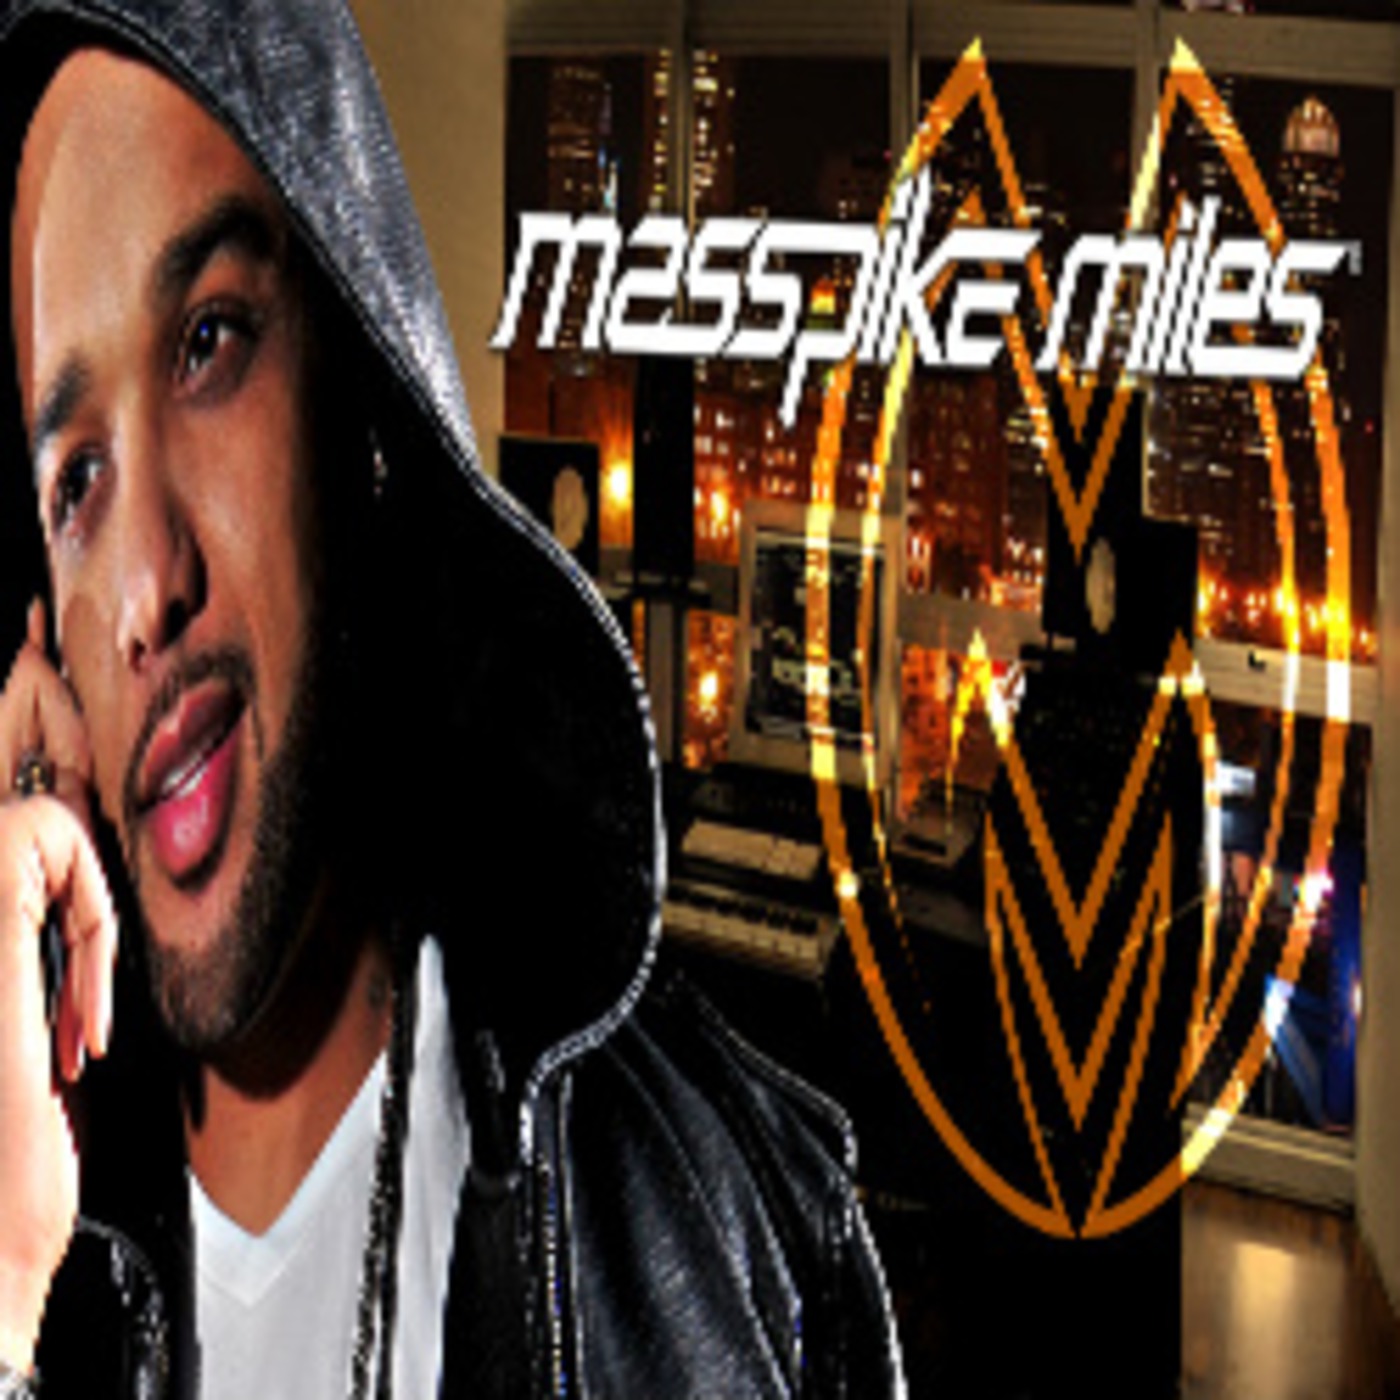 Masspike Miles Listen Free On Castbox